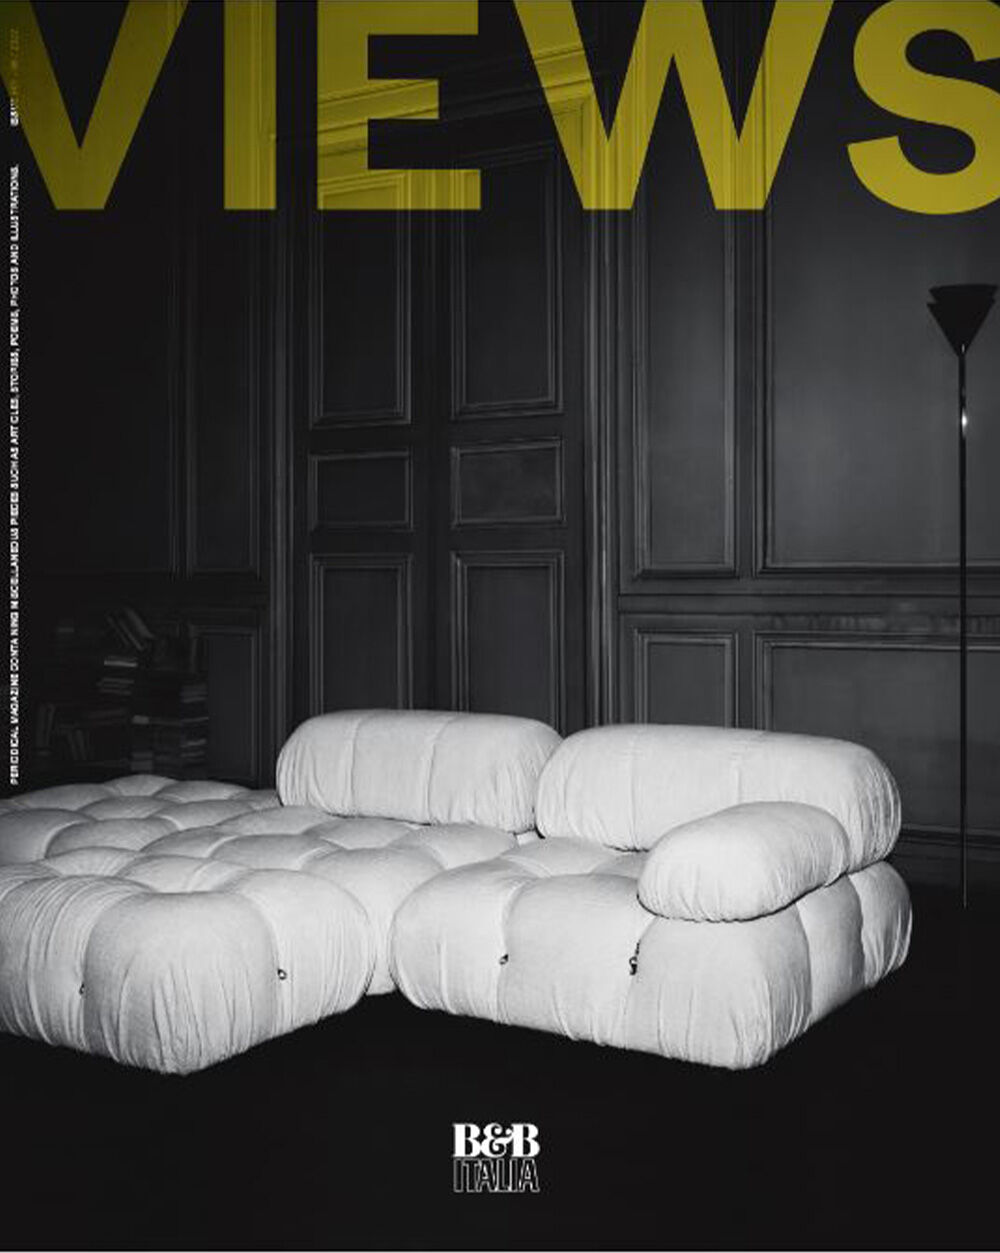 B&B Italia - The Views. Catalog of B&B Italia's Stylish Accommodations and Furnishings.